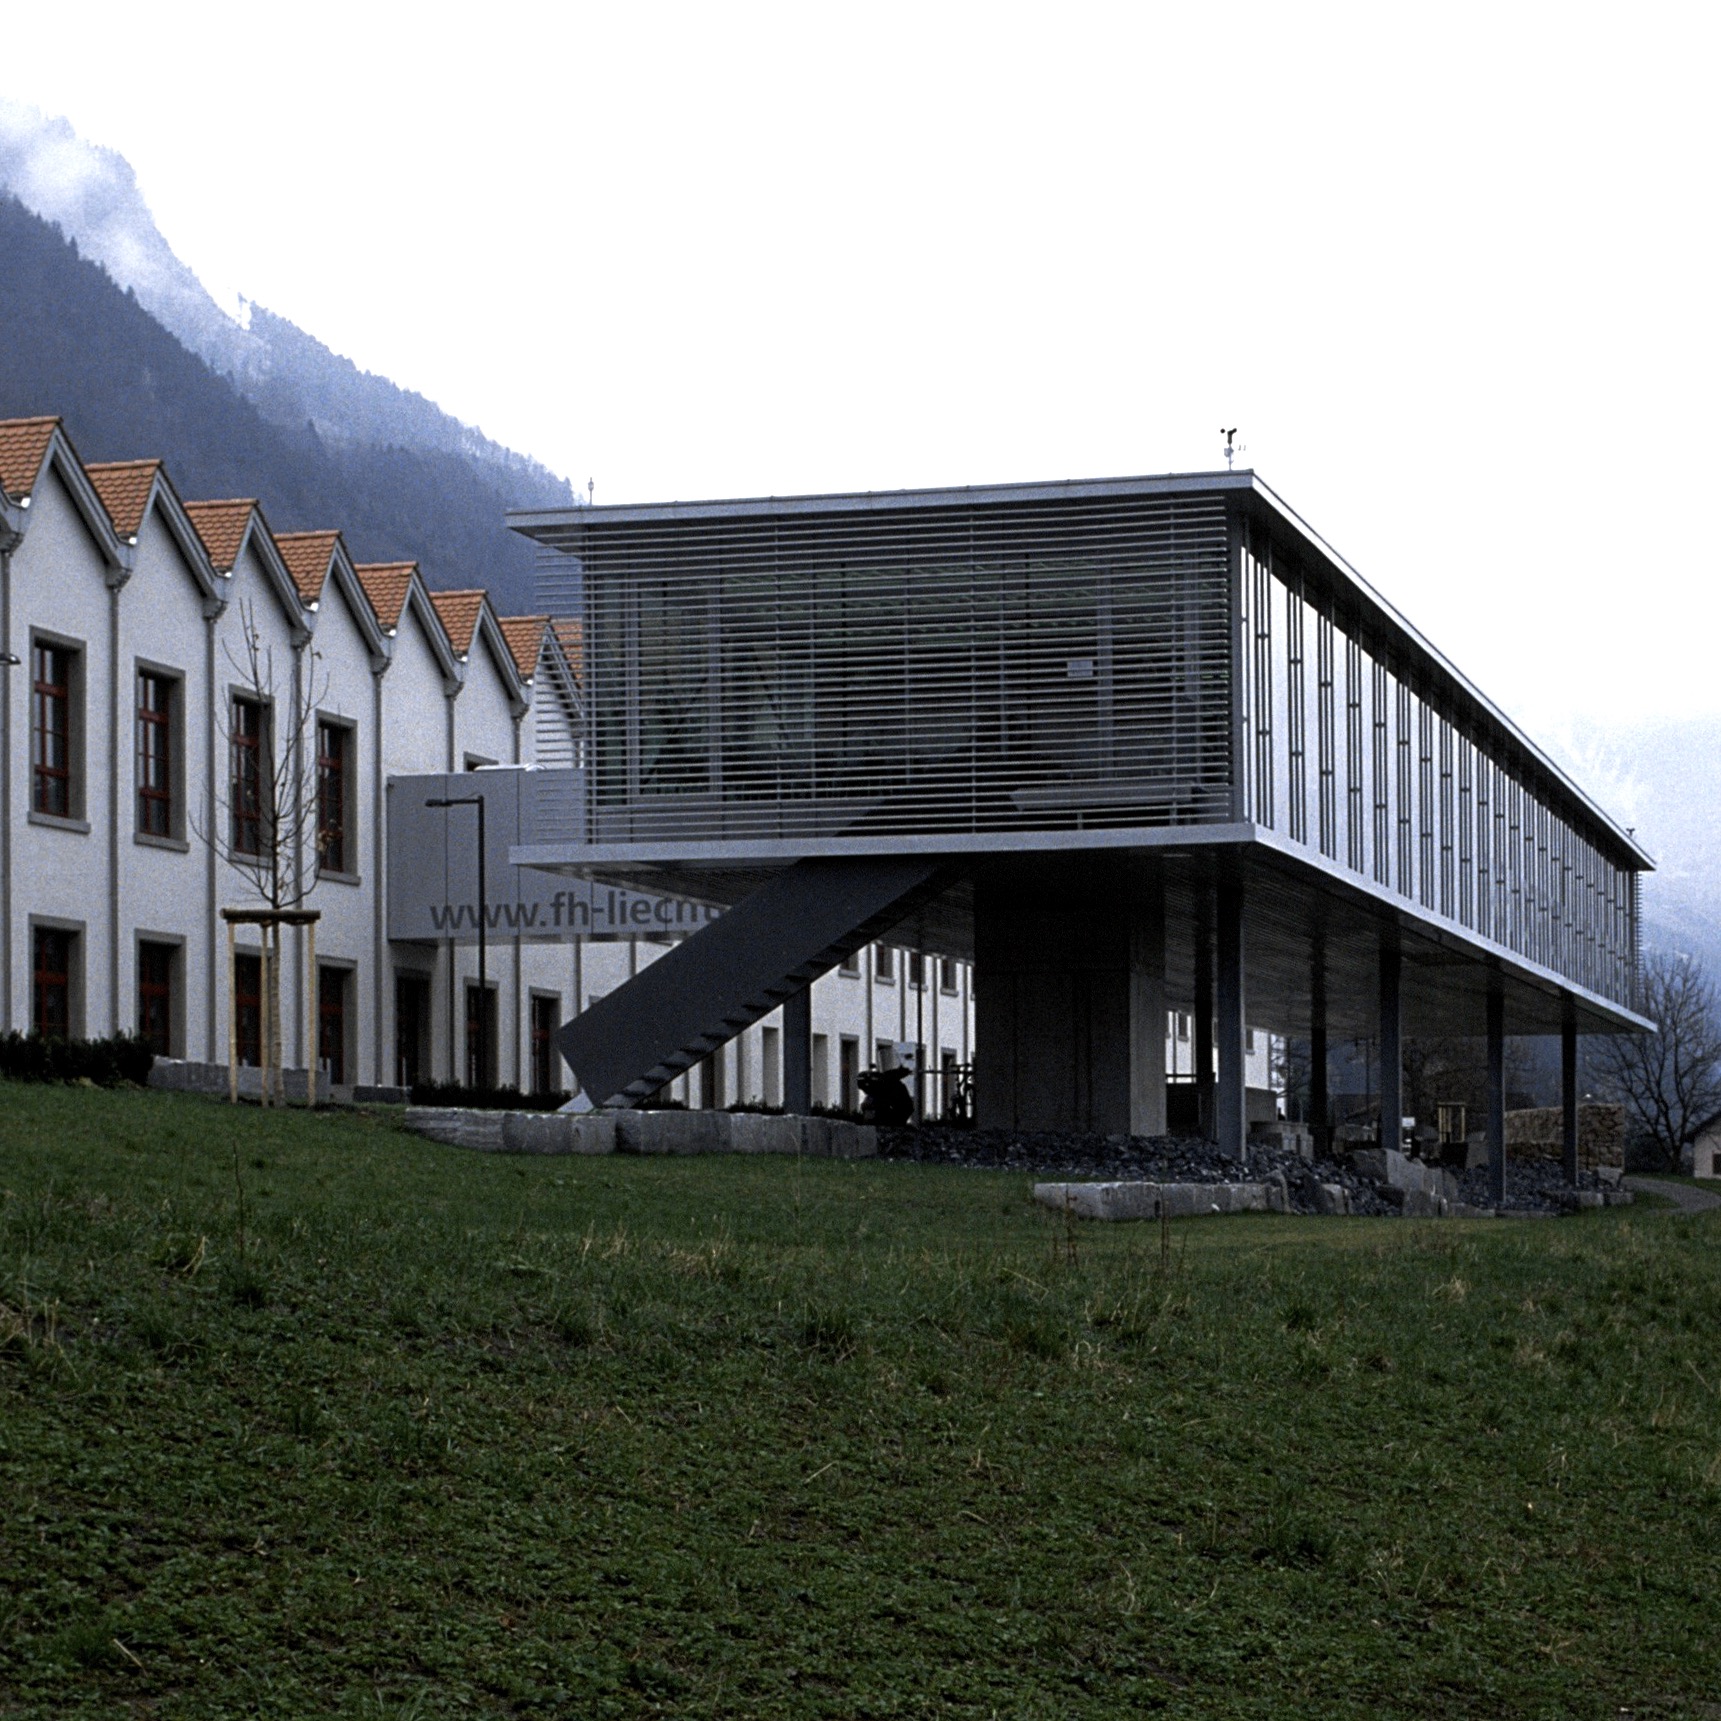 Universität Liechtenstein photograph © Thomas Deckker 2003